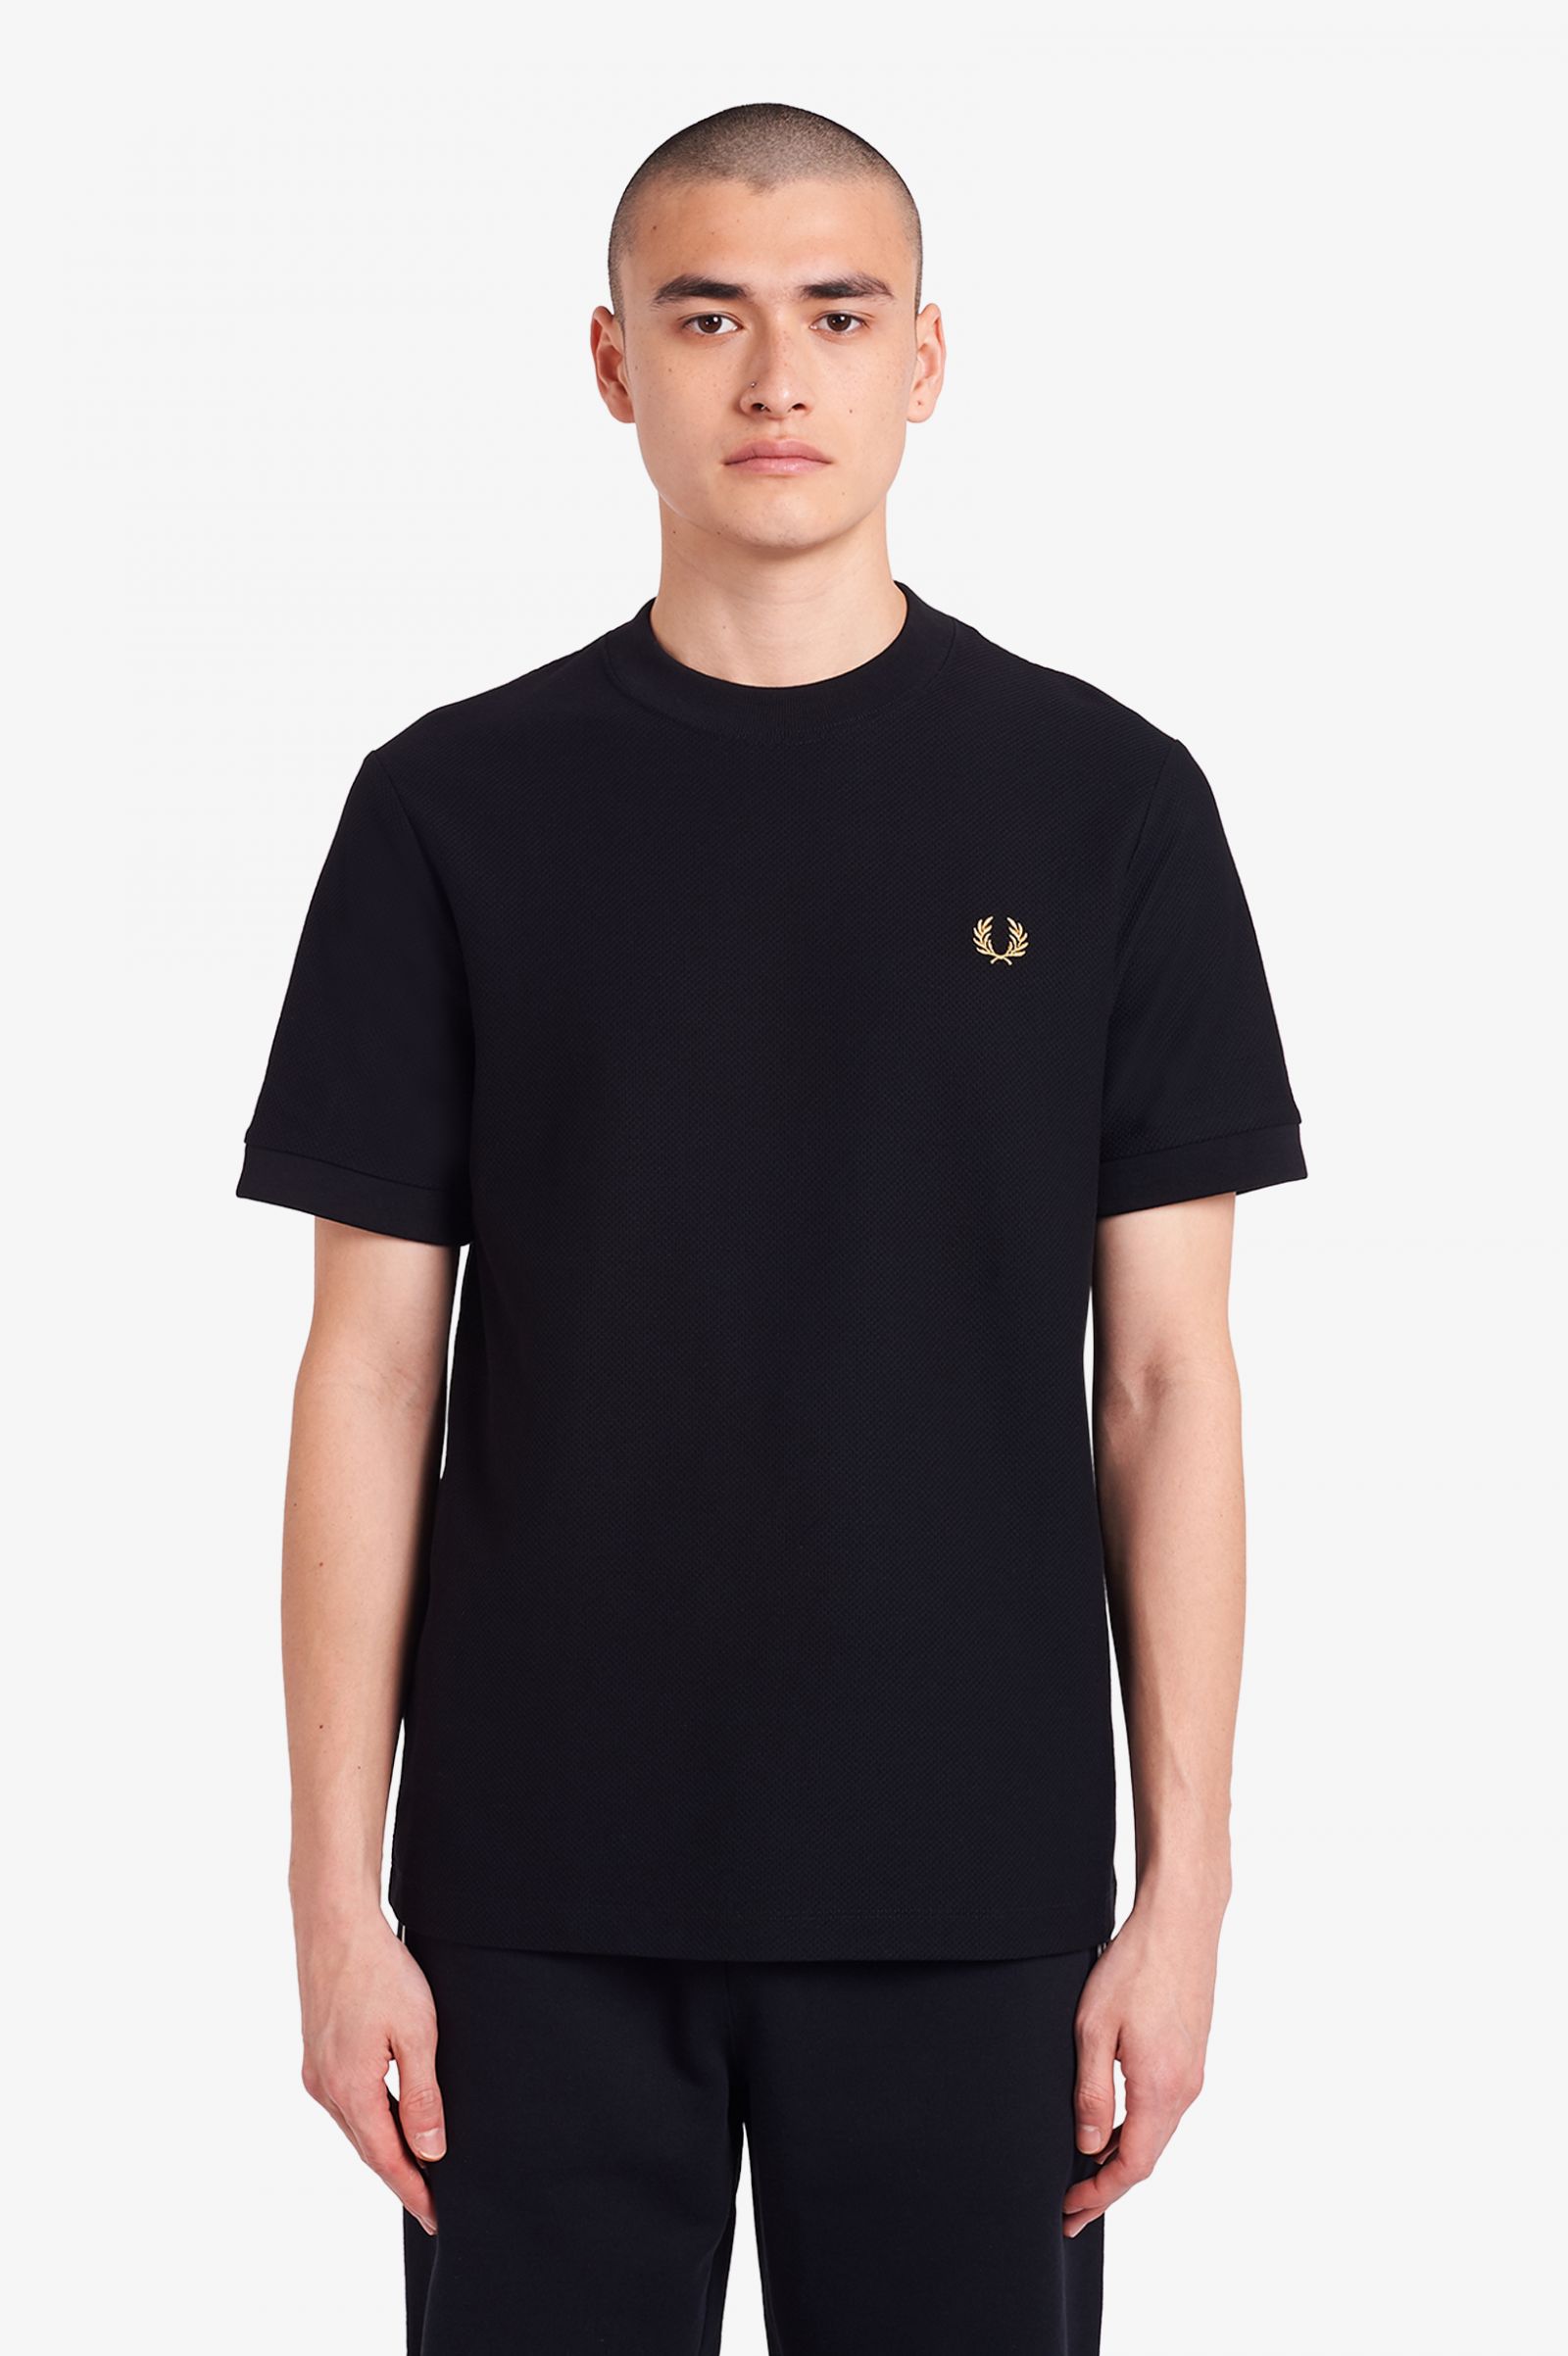 Piqué T-Shirt - Black | Men's T-Shirts | Designer T-Shirts for Men ...